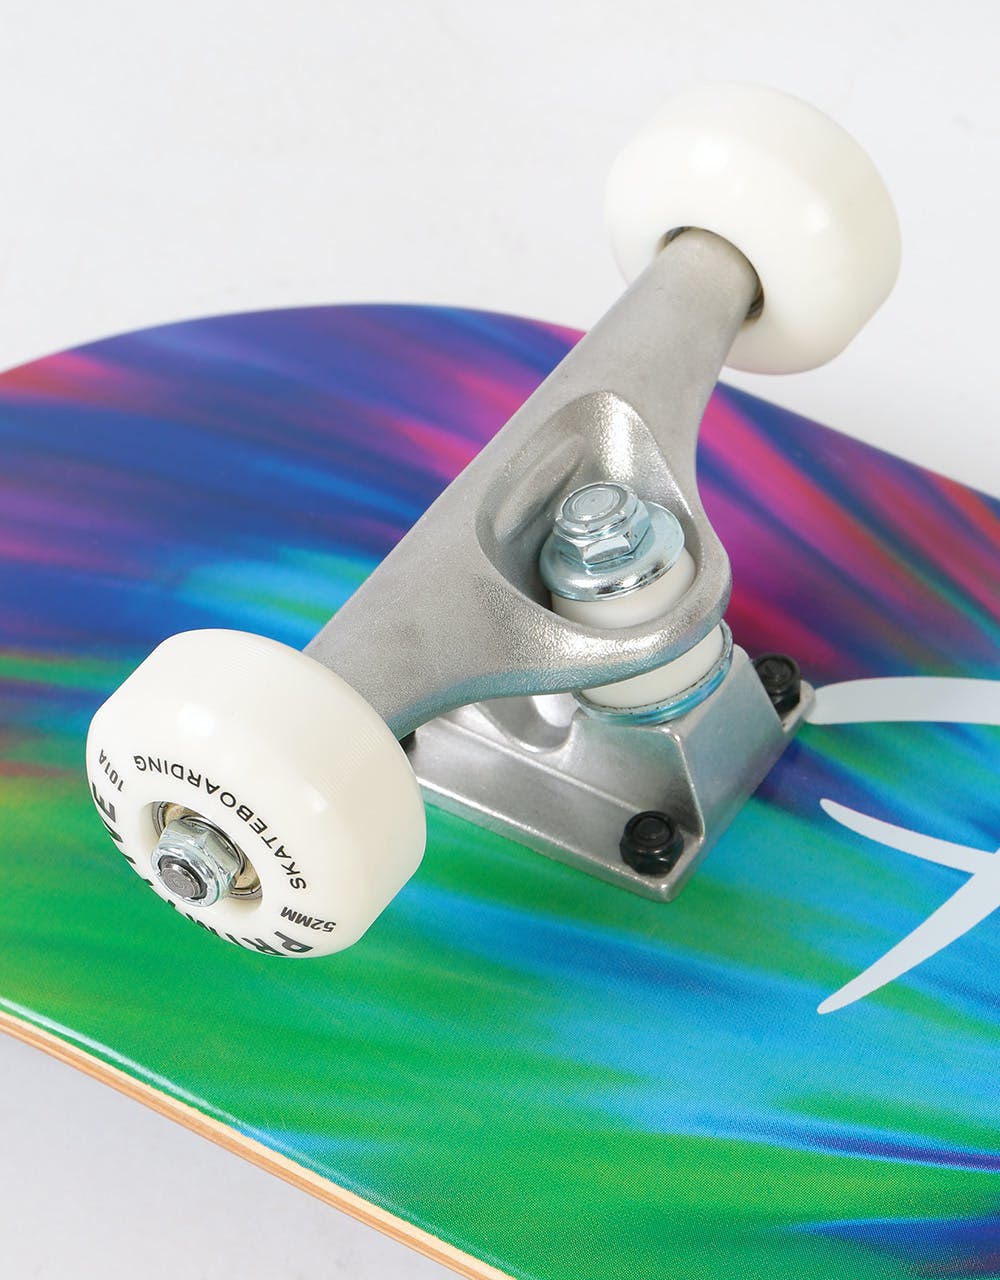 Primitive Nuevo Trippy Complete Skateboard - 7.5"